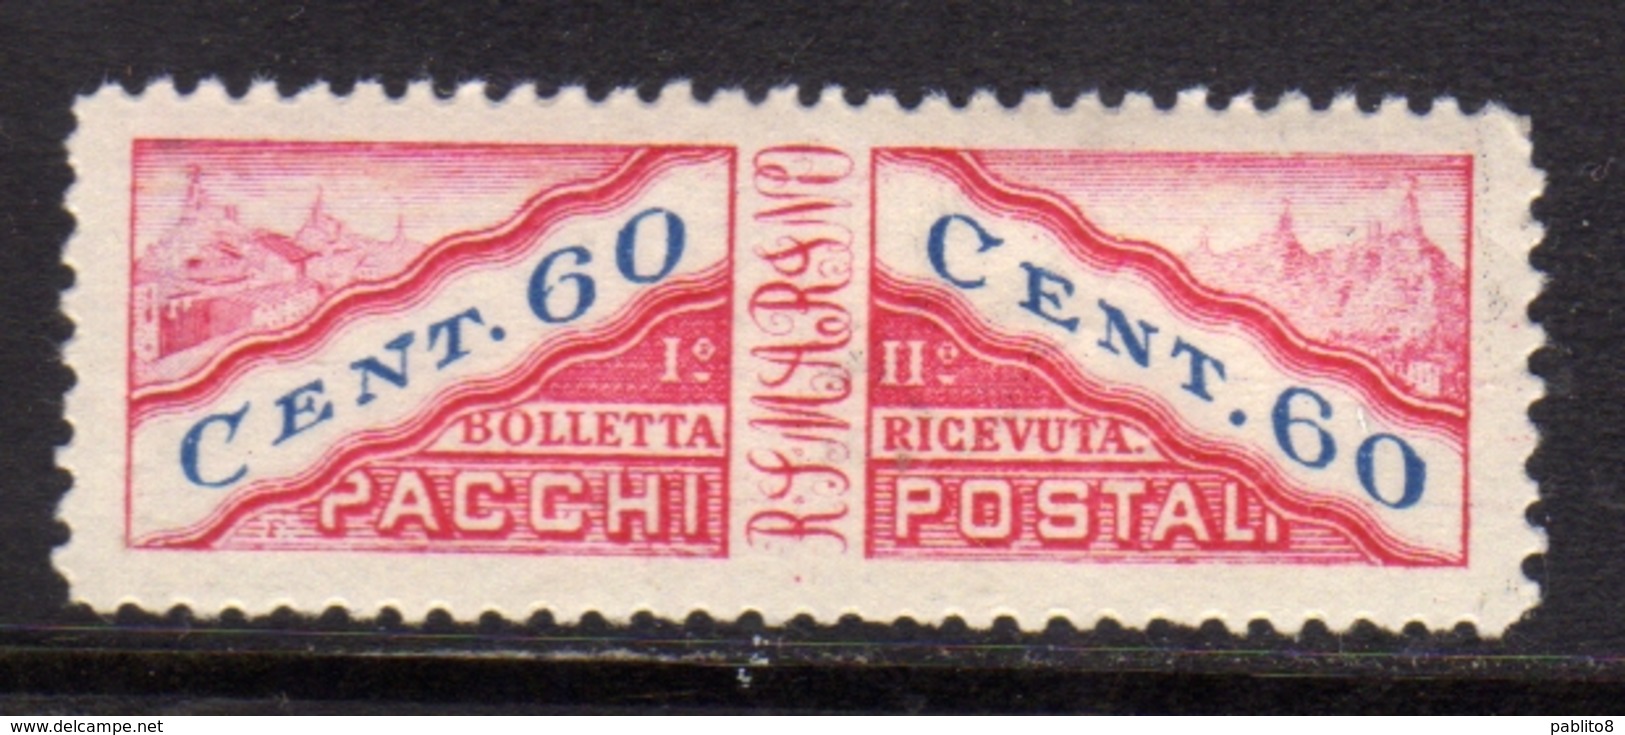 SAN MARINO 1928 PACCHI POSTALI PARCEL POST CENT. 60c MNH - Parcel Post Stamps